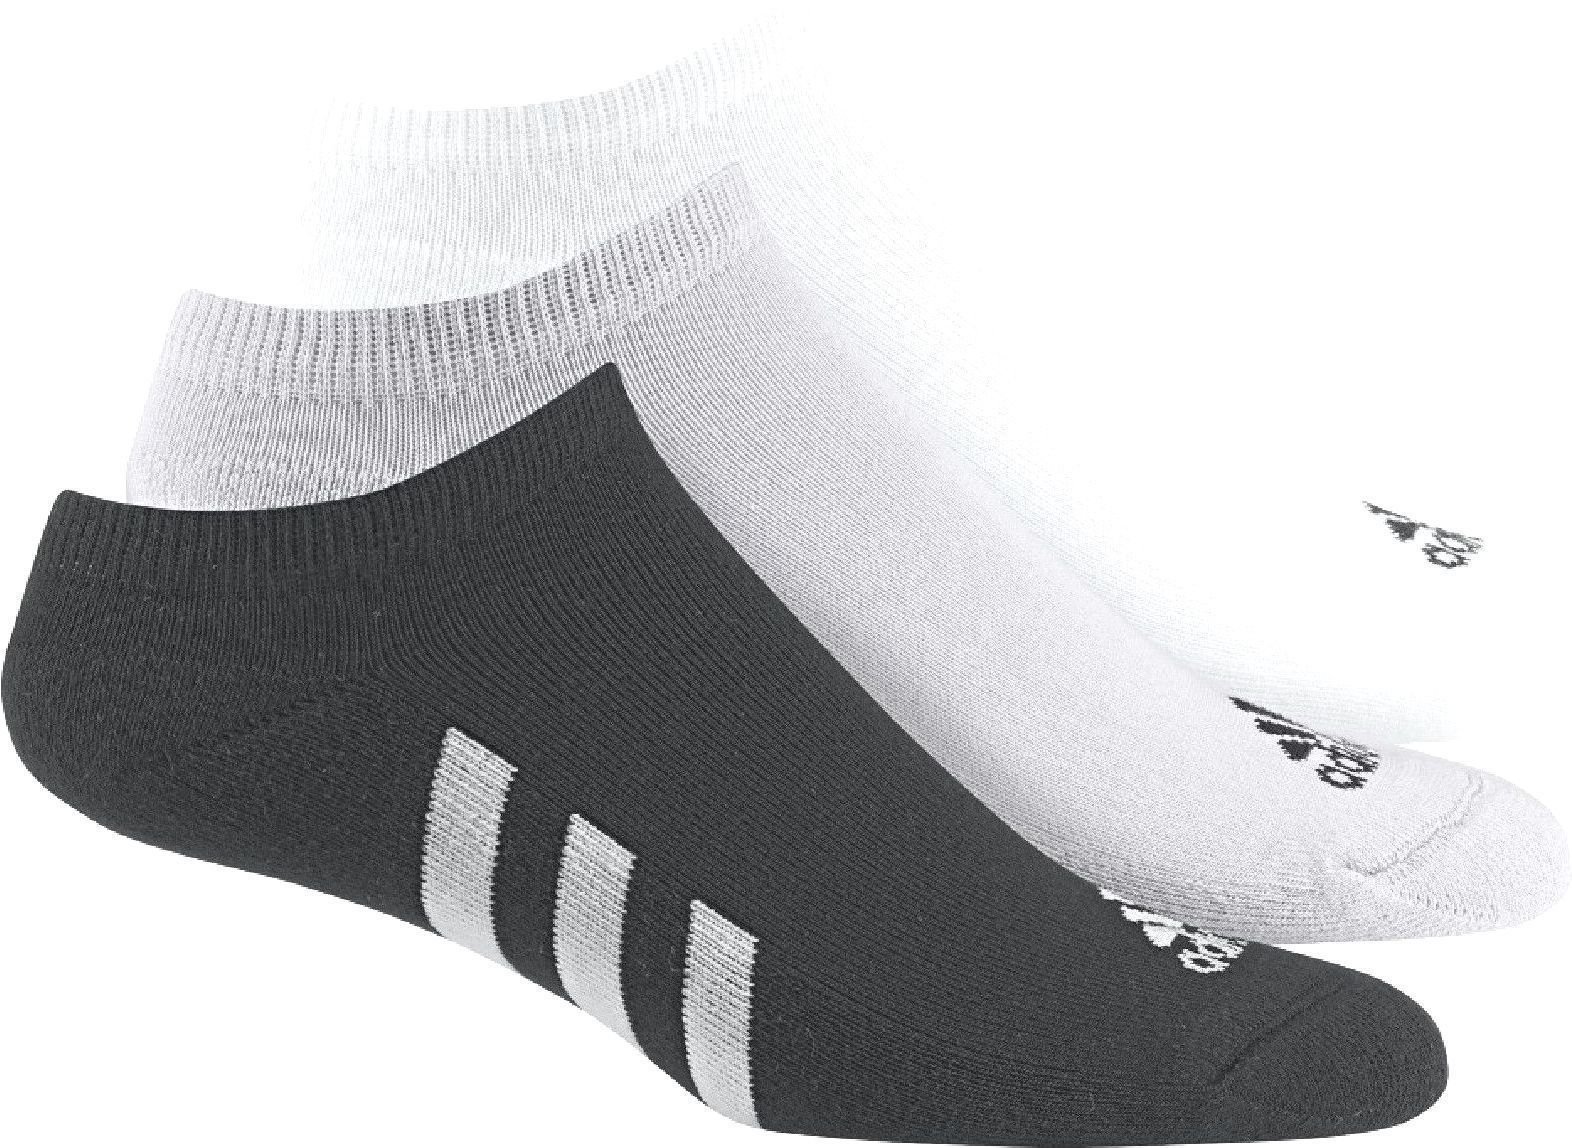 Ponožky Adidas 3-Pack No Show BK/GR/WH 10-13